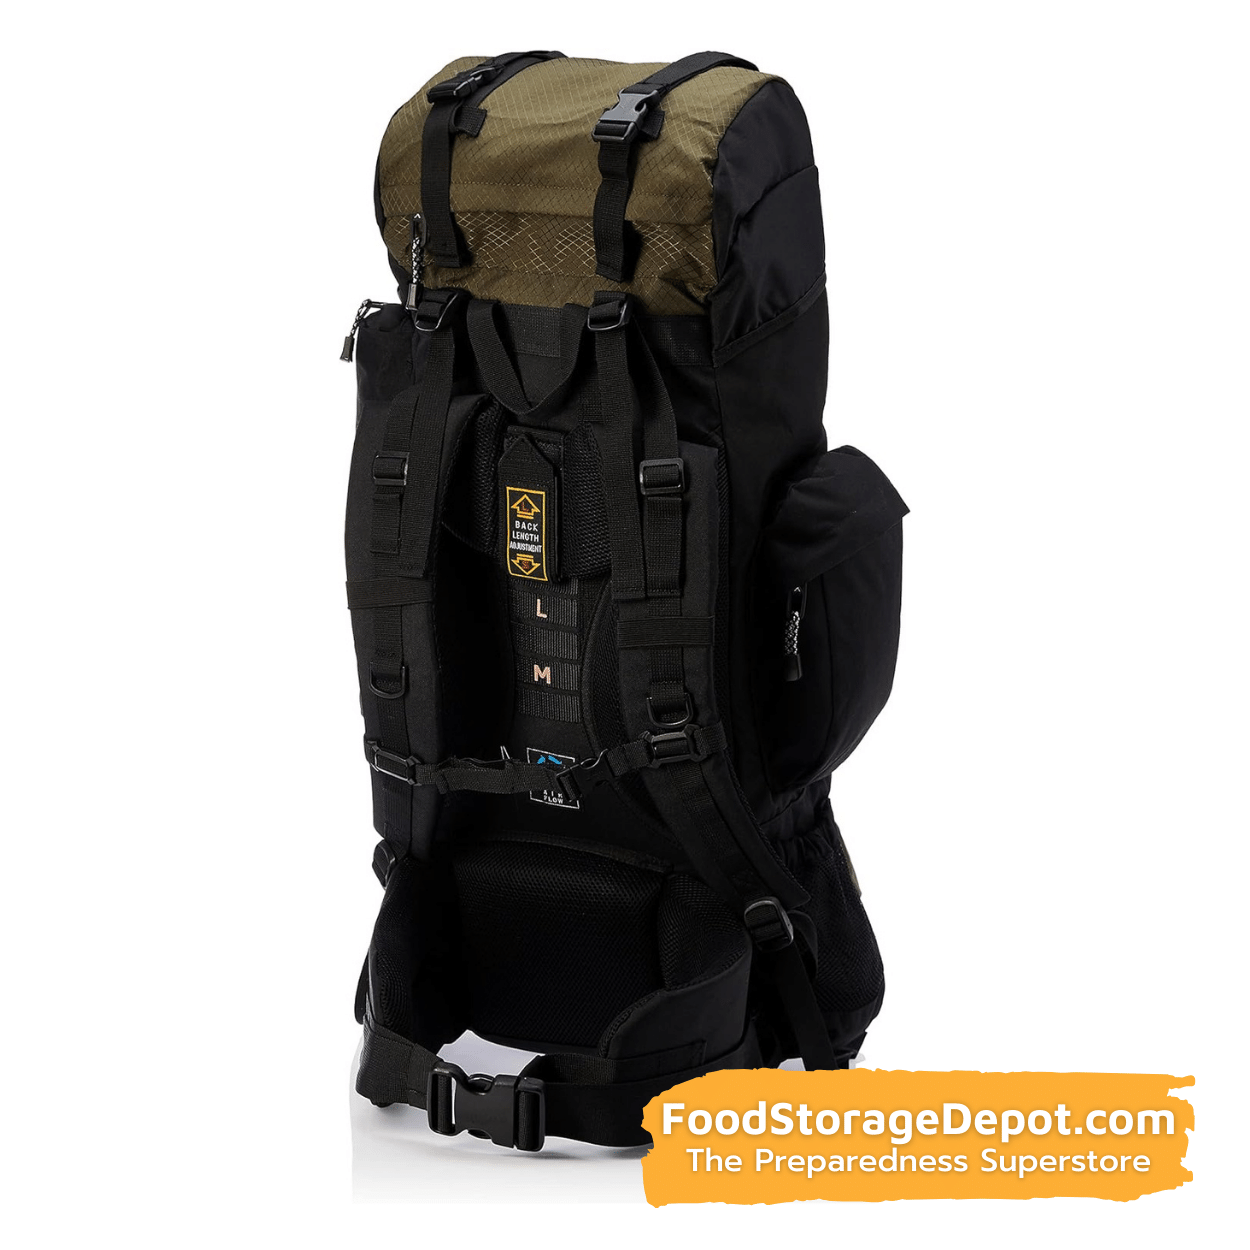 Backpack - Explorer 4000 (Great for 72-Hour Kits)